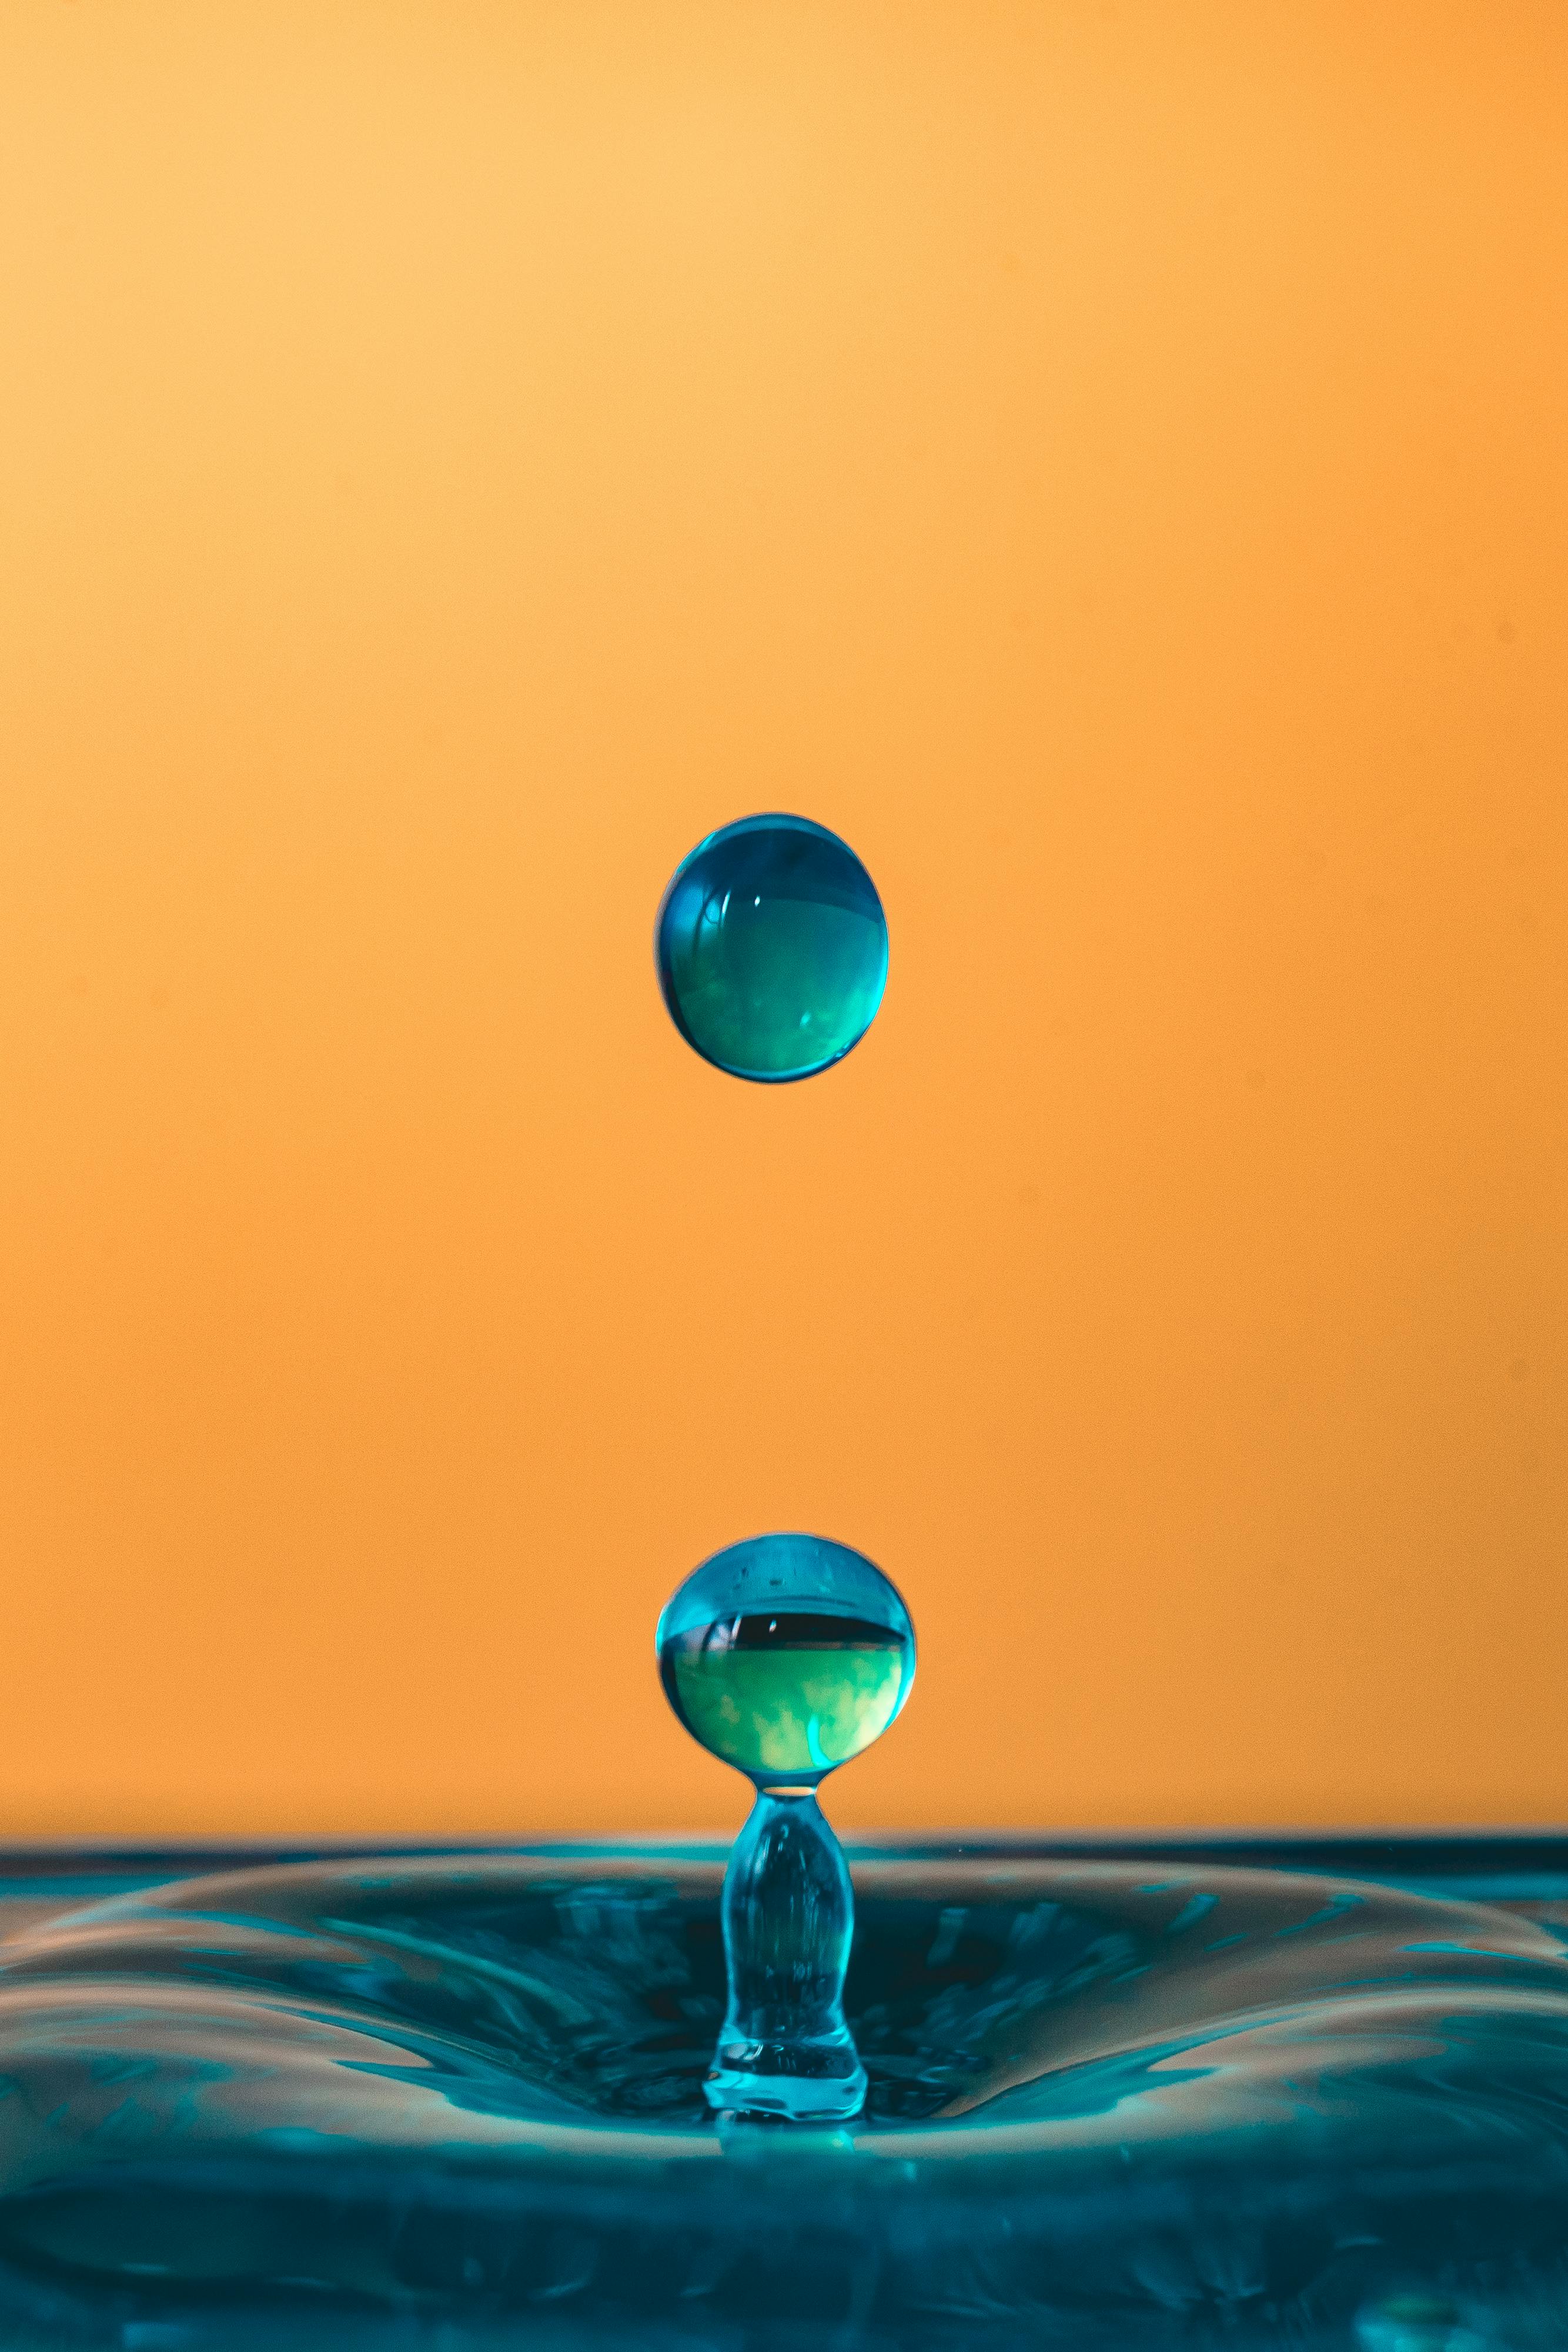 Water Drops Wallpaper · Free Stock Photo